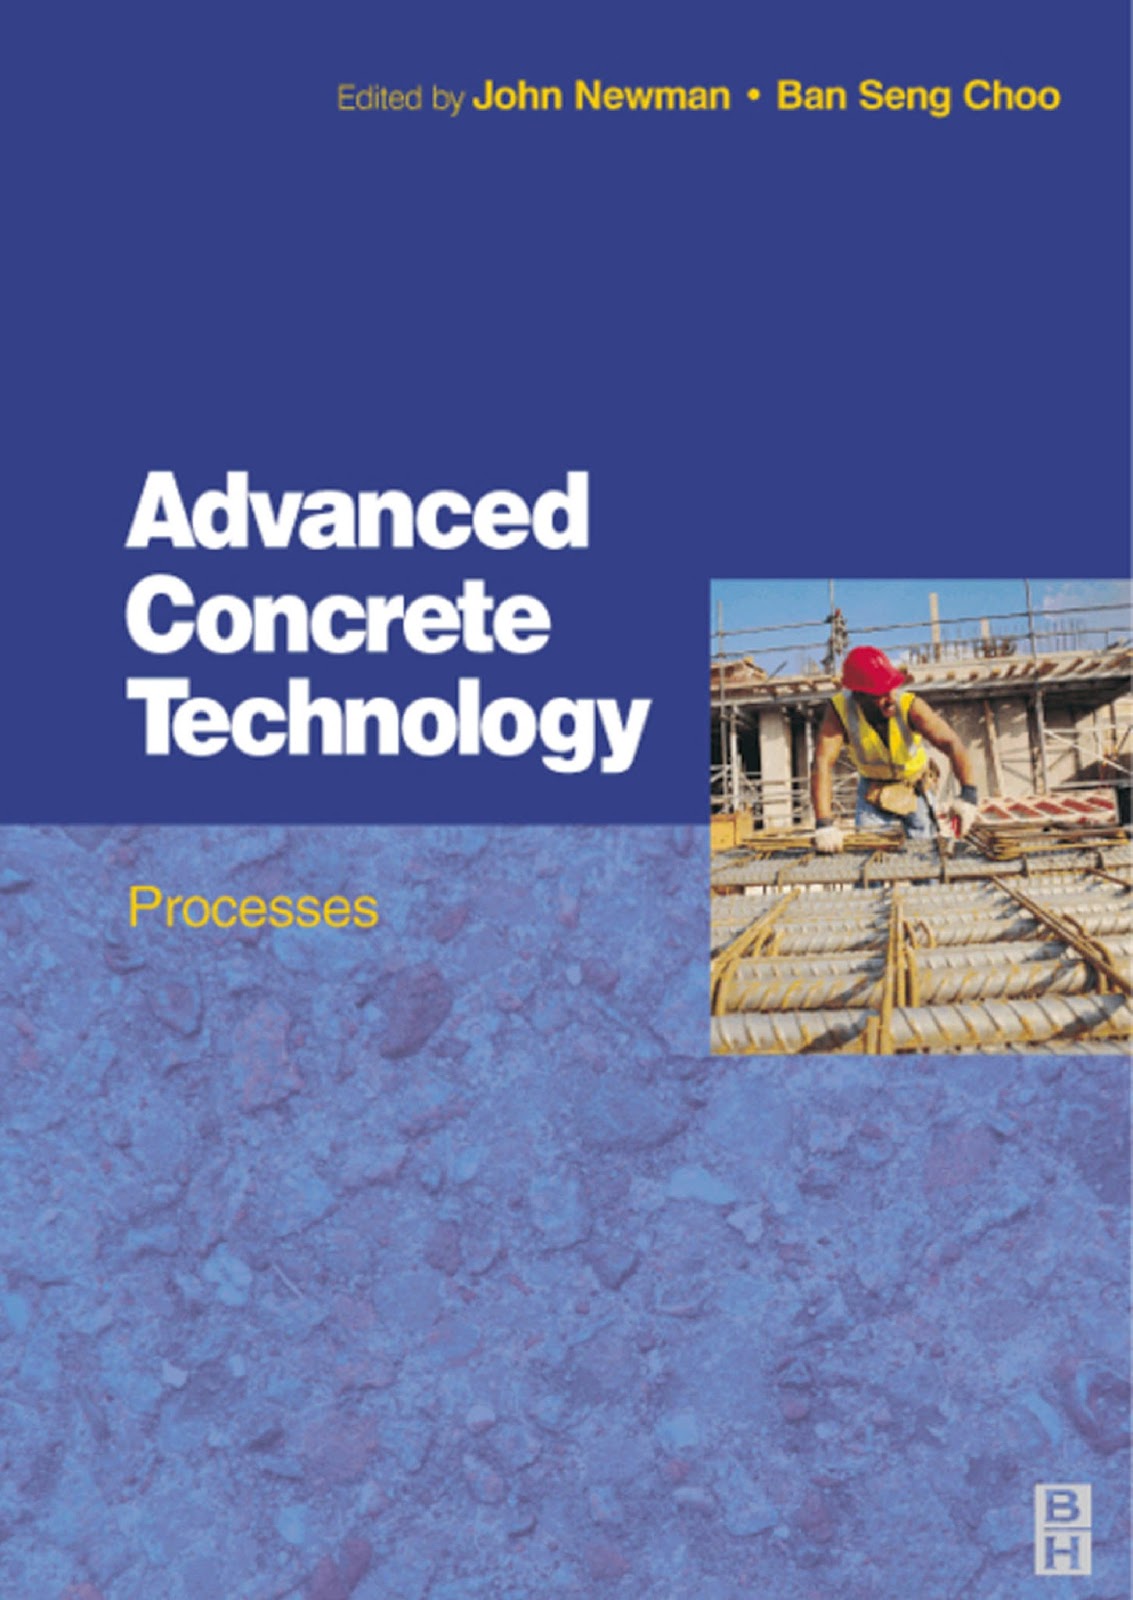 Advanced Concrete Technology Processes - Engineering Books